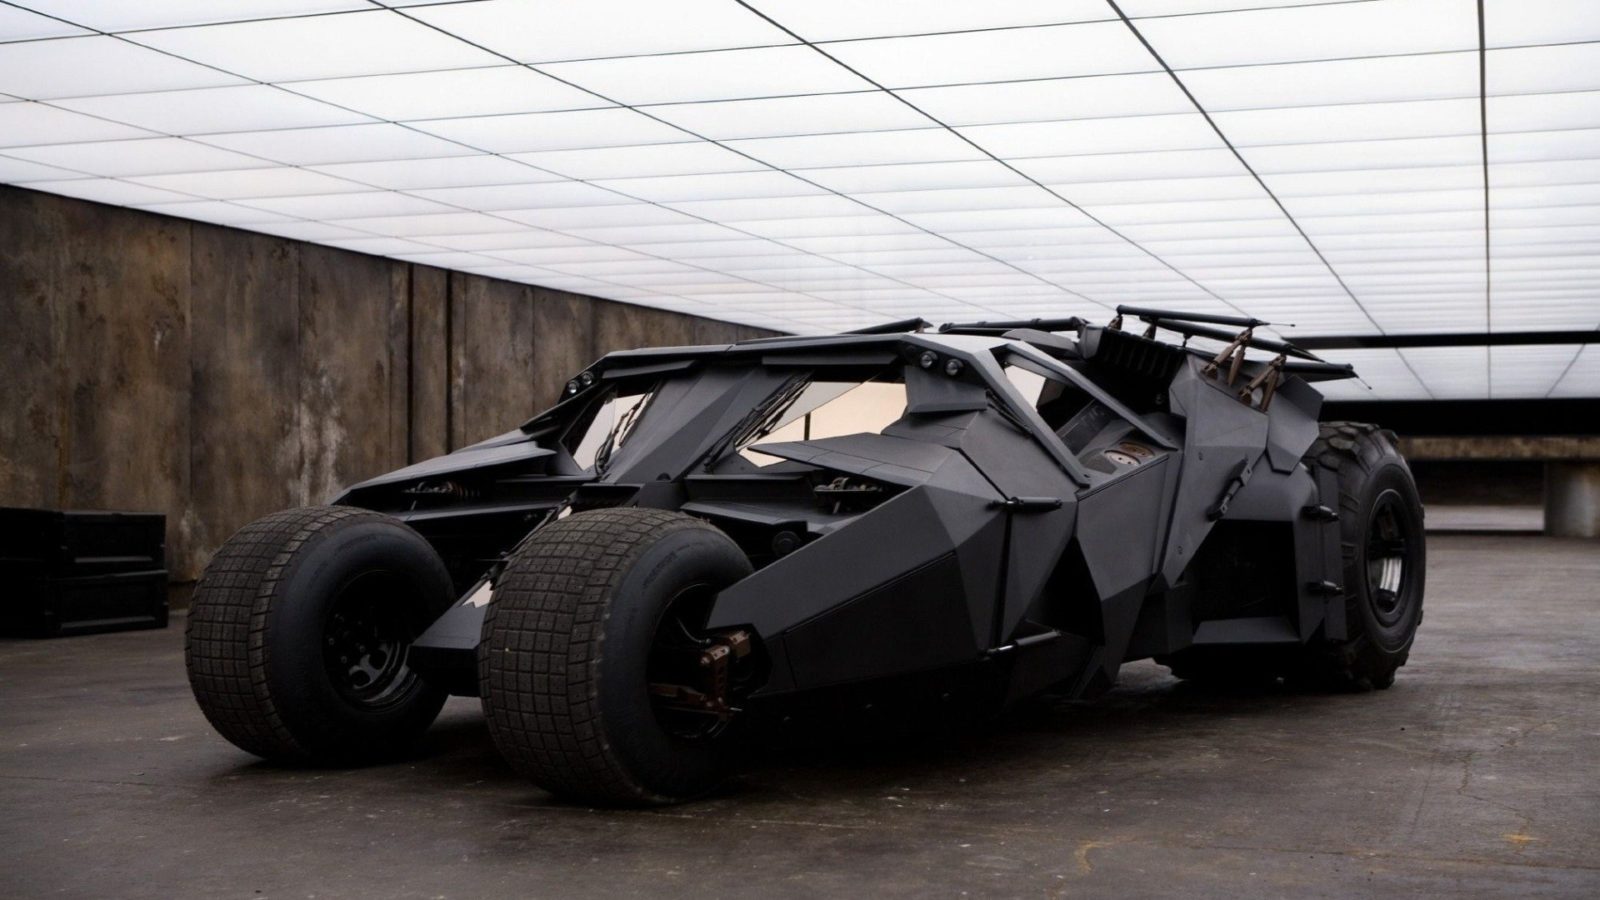 http://vanillasplash.co.uk/wp-content/uploads/2013/01/batman-batmobile-car.jpg